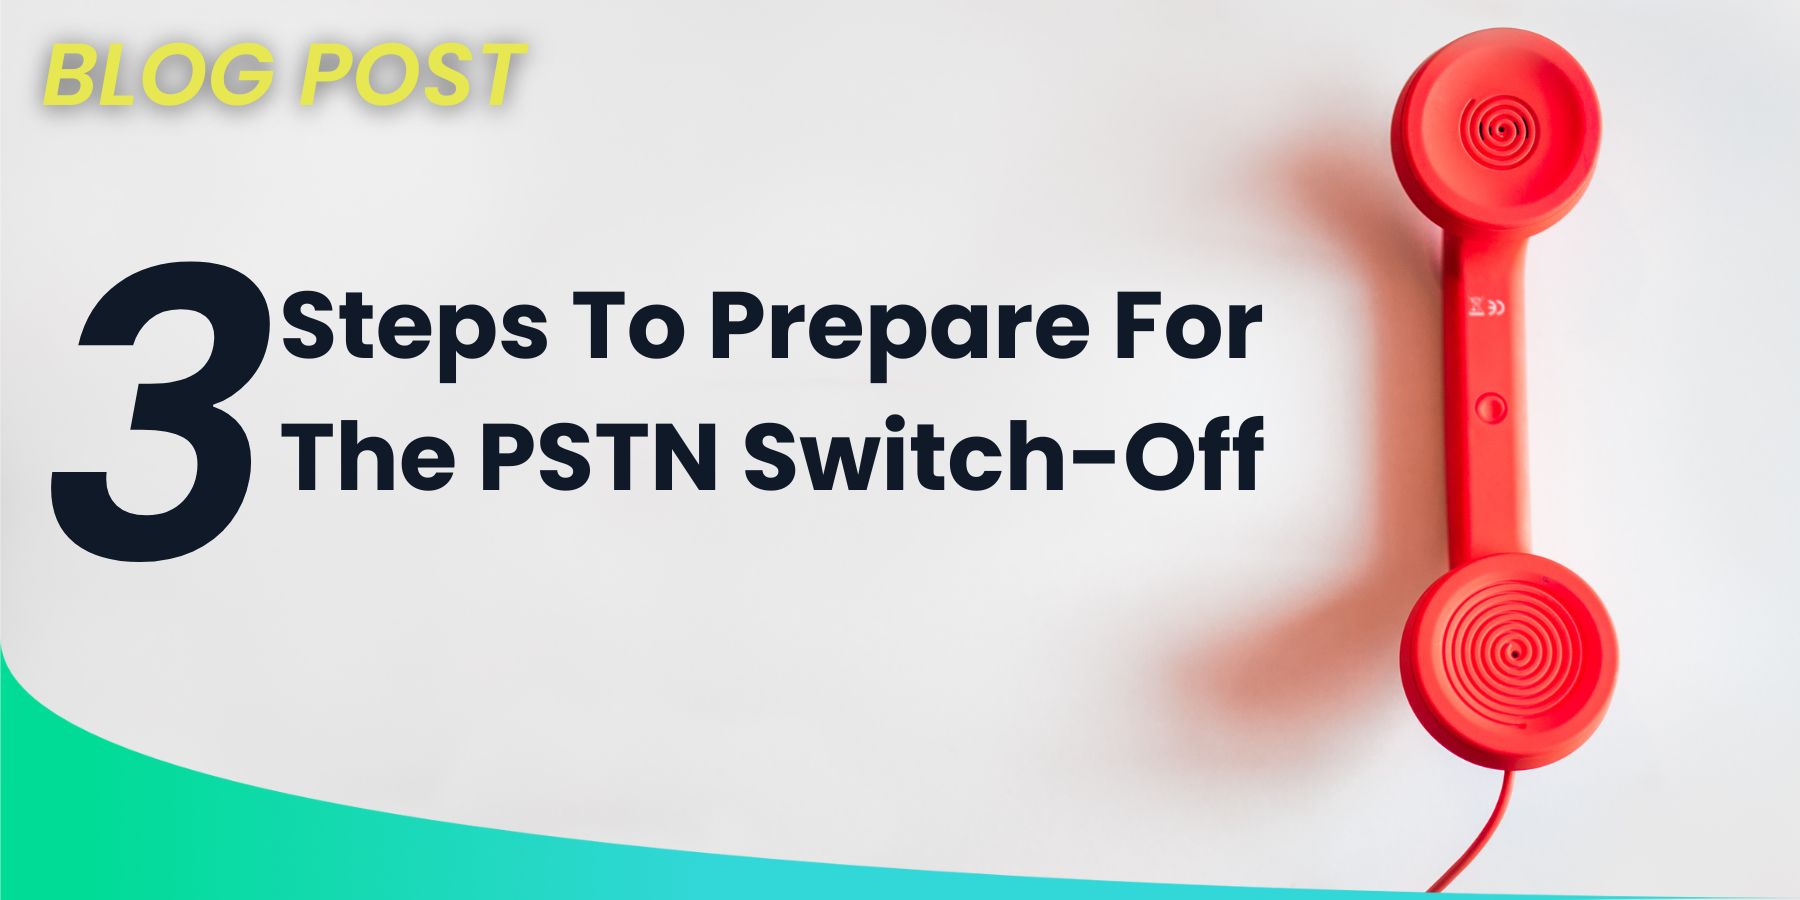 PSTN Switch off website